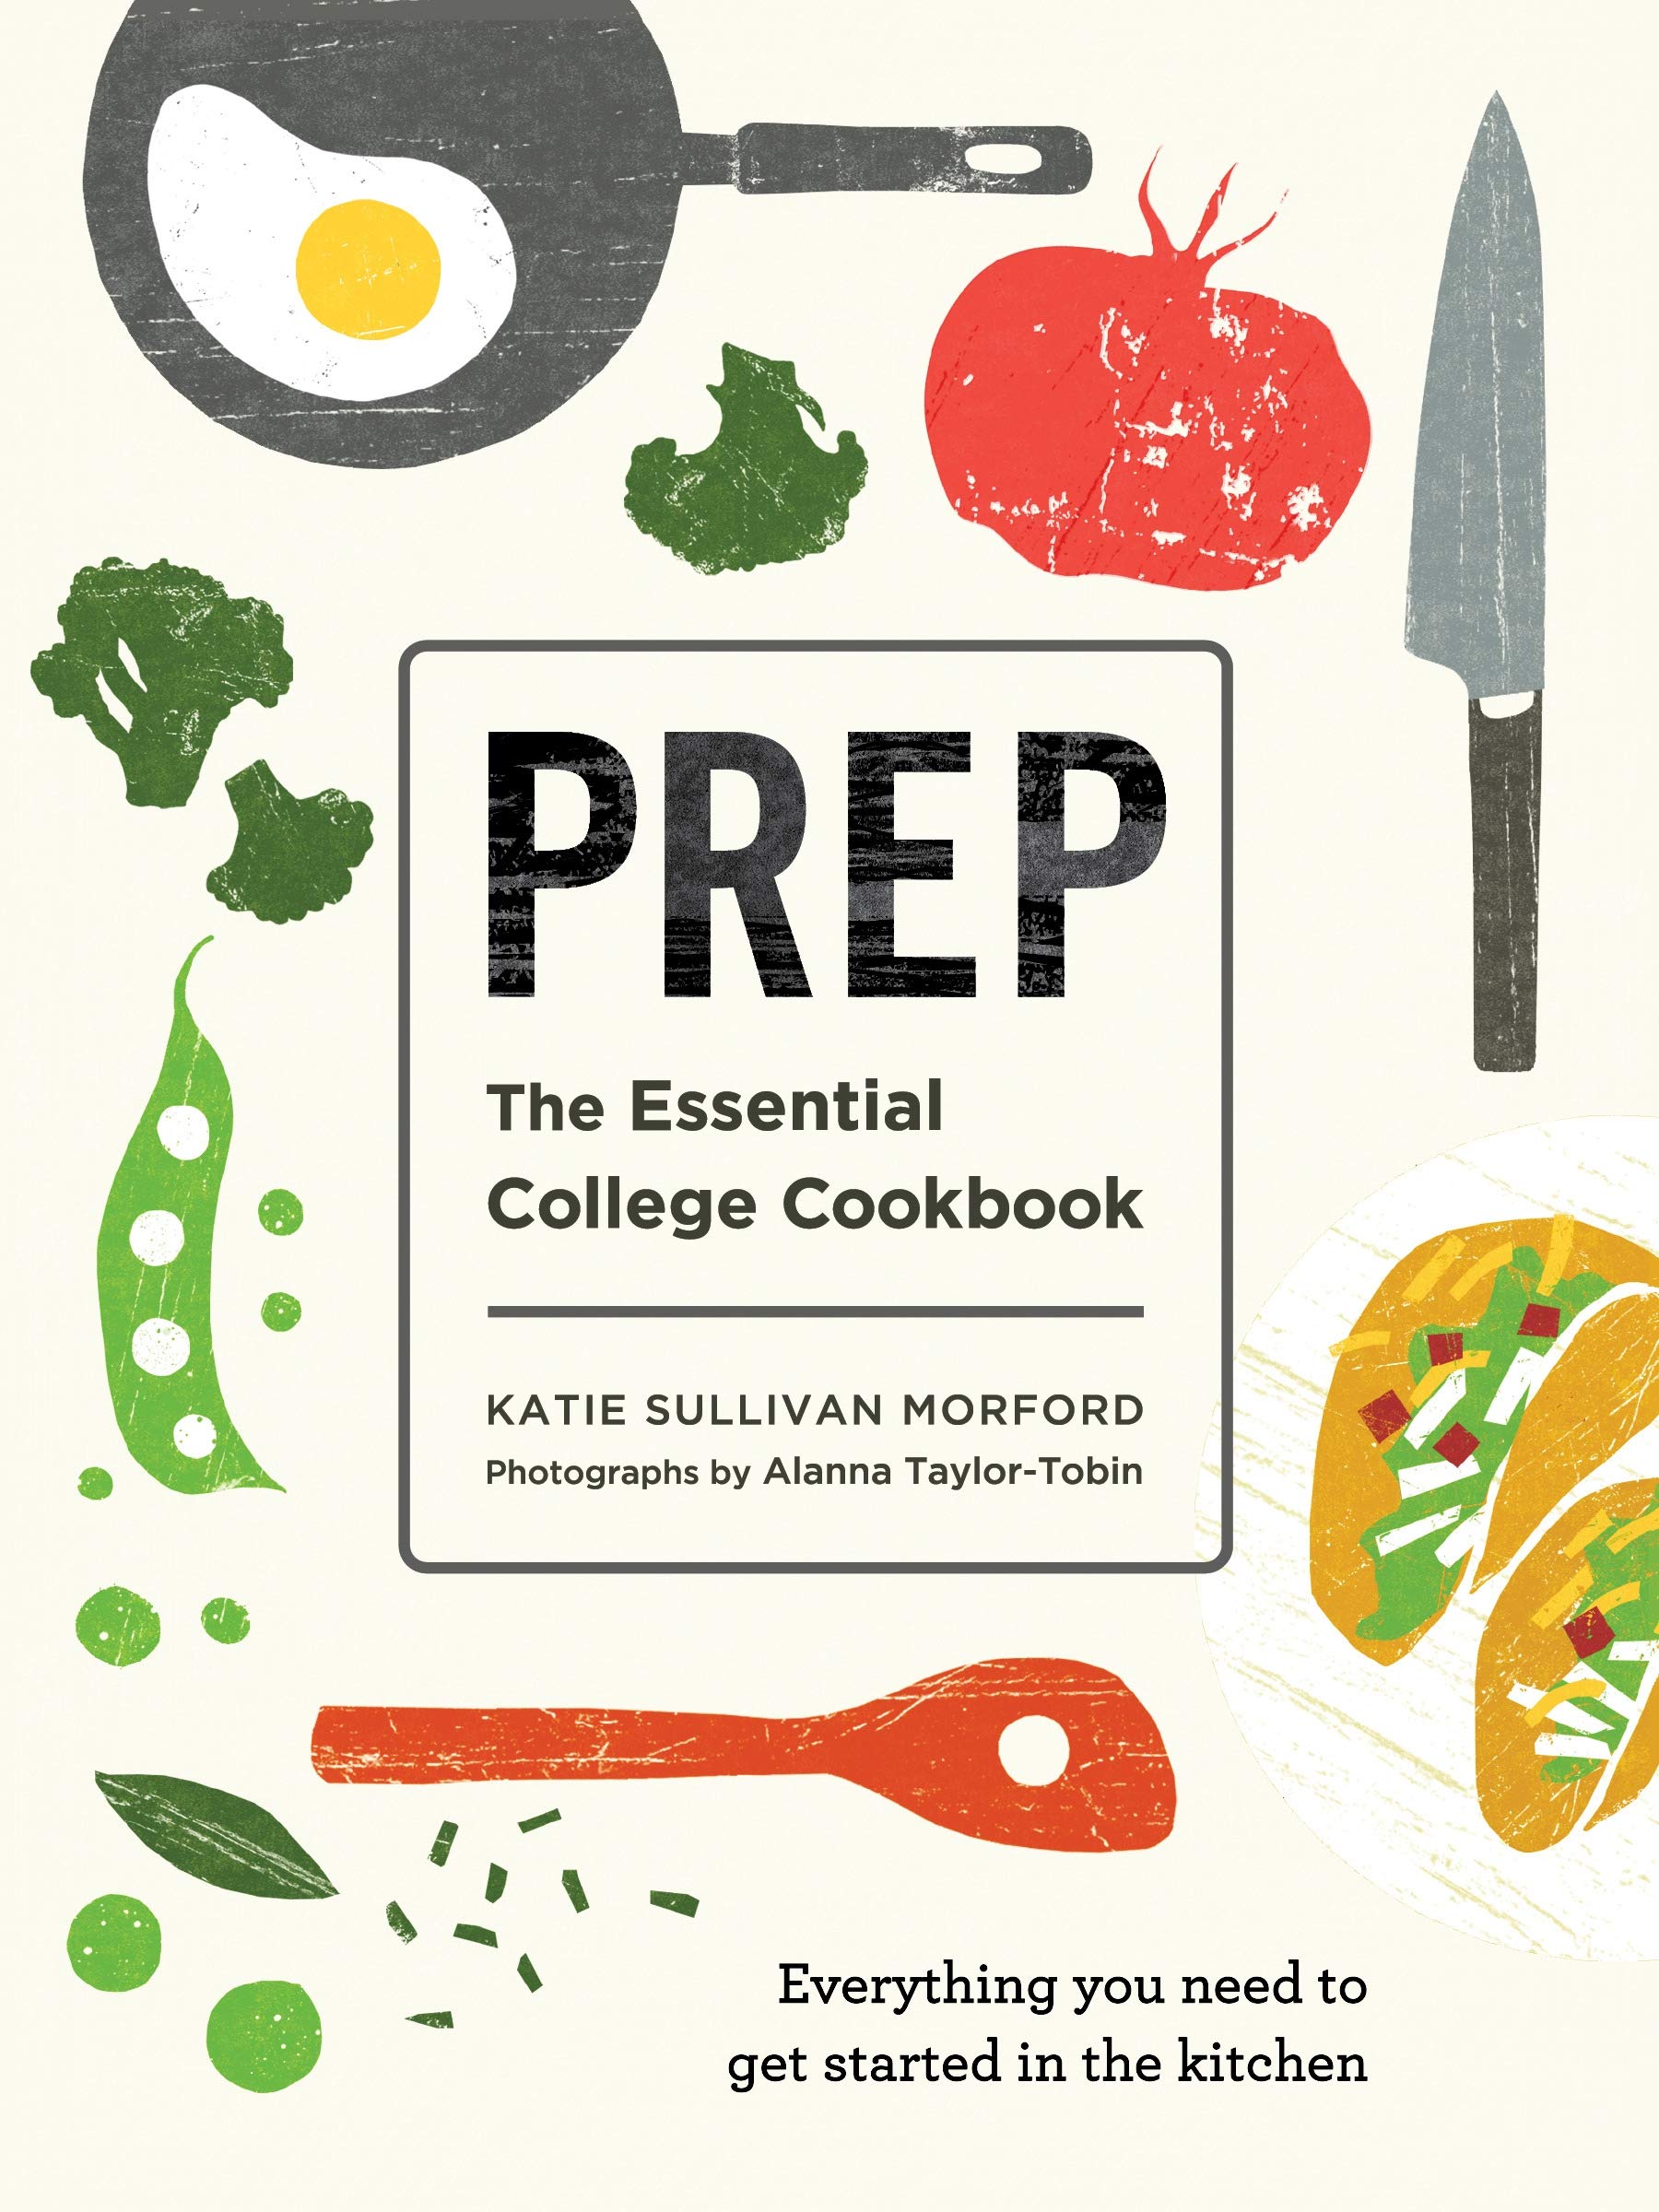 Prep: The Essential College Cookbook (Katie Sullivan Morford)